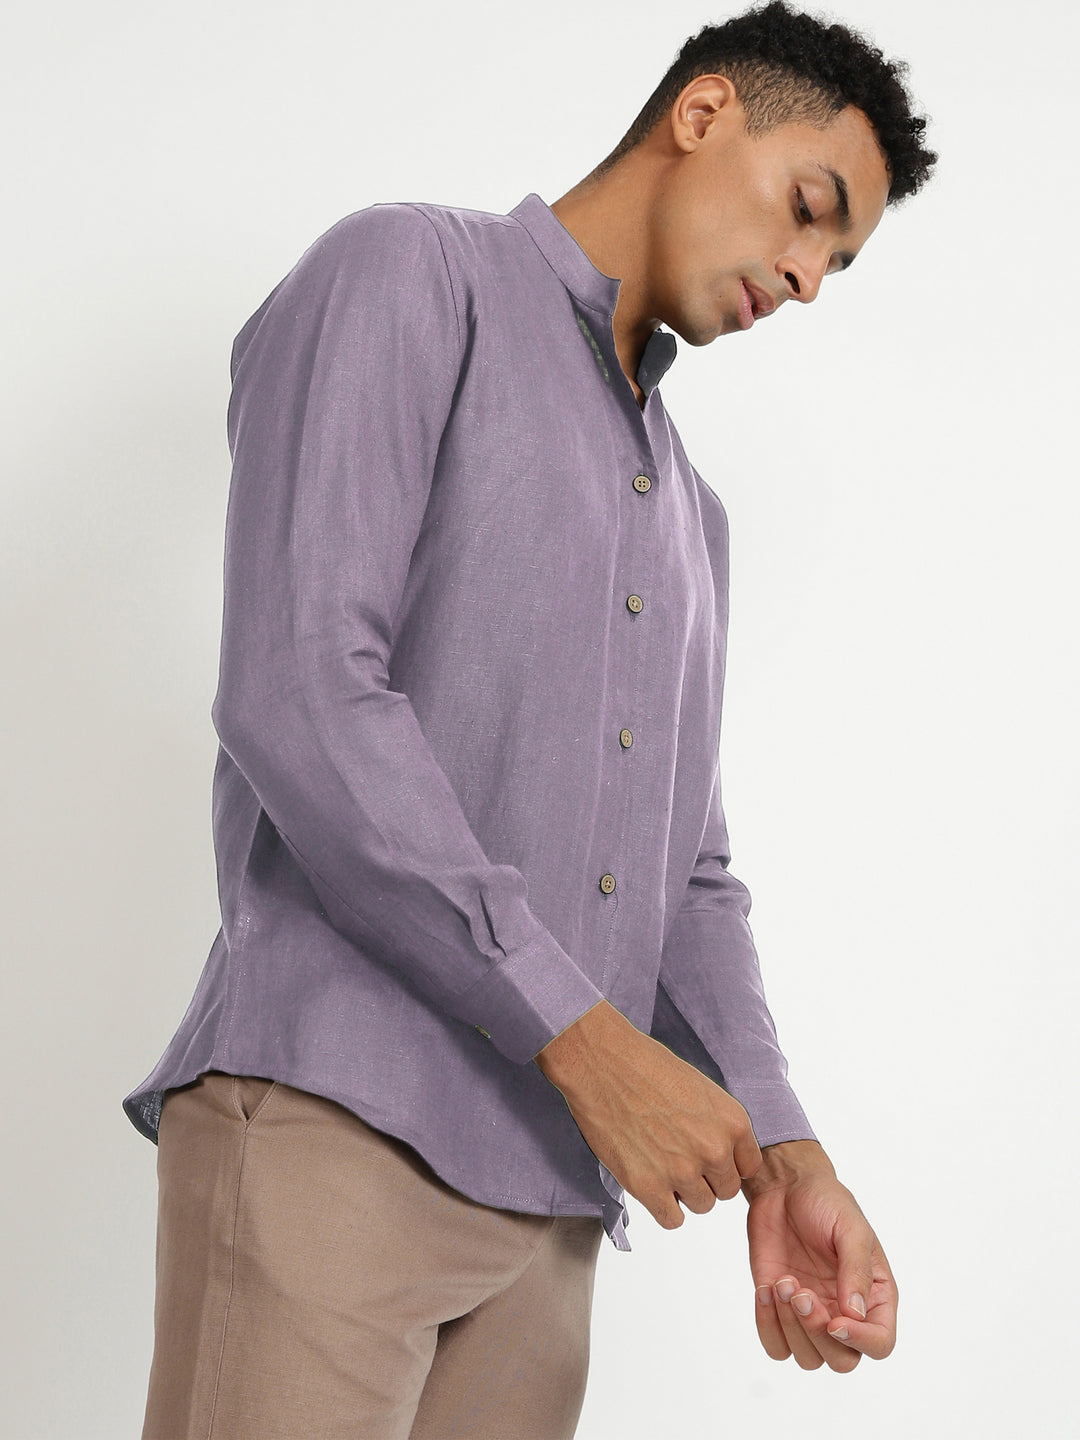 Craig - Pure Linen V Neck Full Sleeve Shirt - Misty Lilac